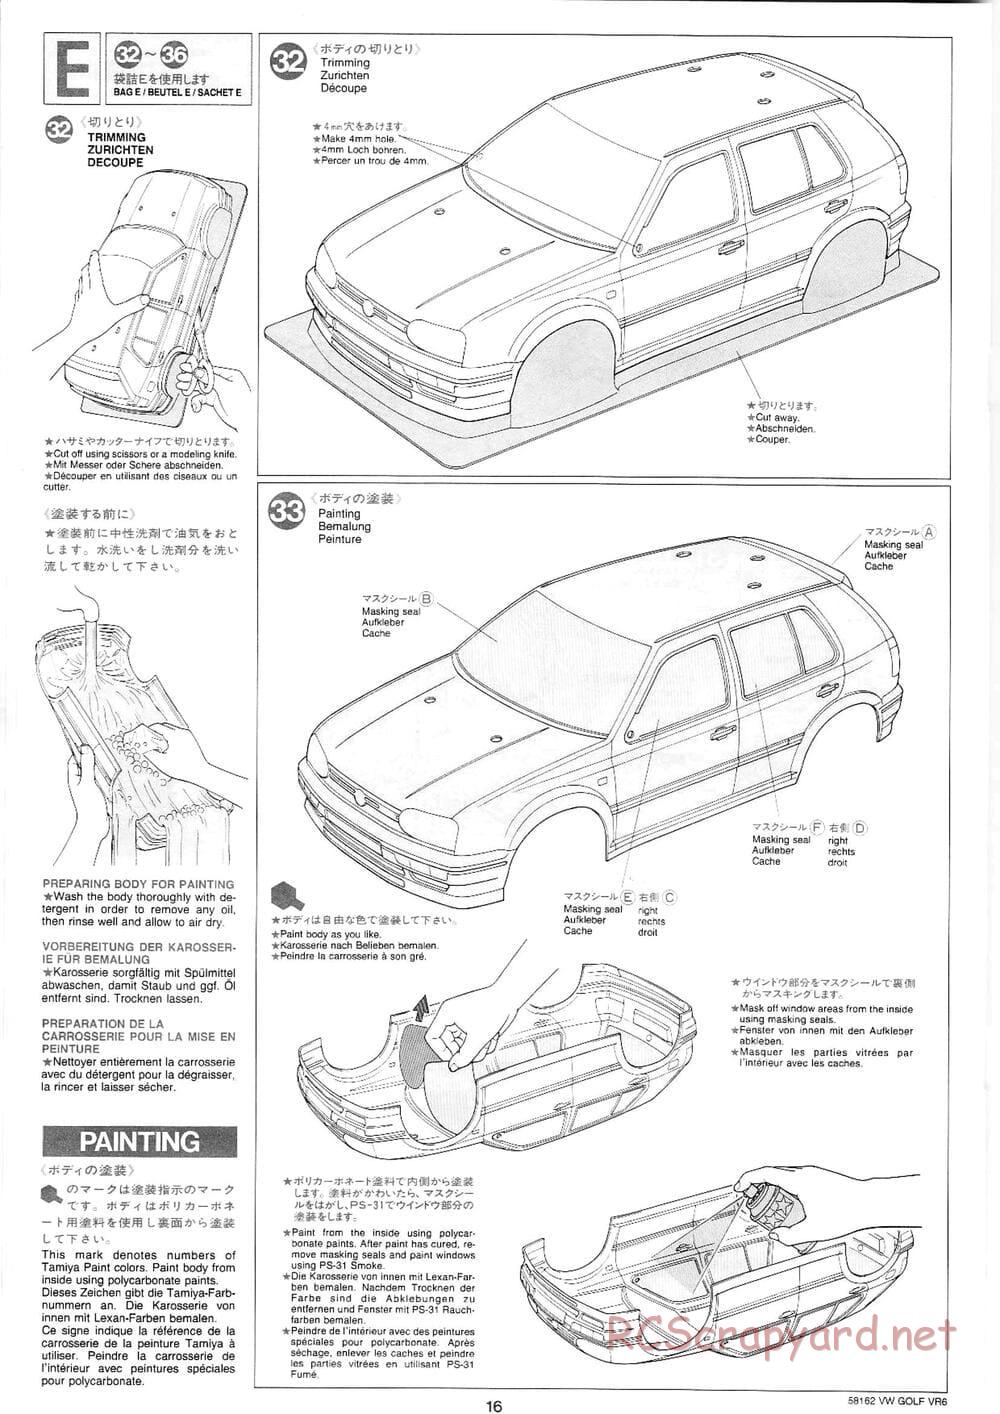 Tamiya - Volkswagen Golf VR6 - FF-01 Chassis - Manual - Page 16